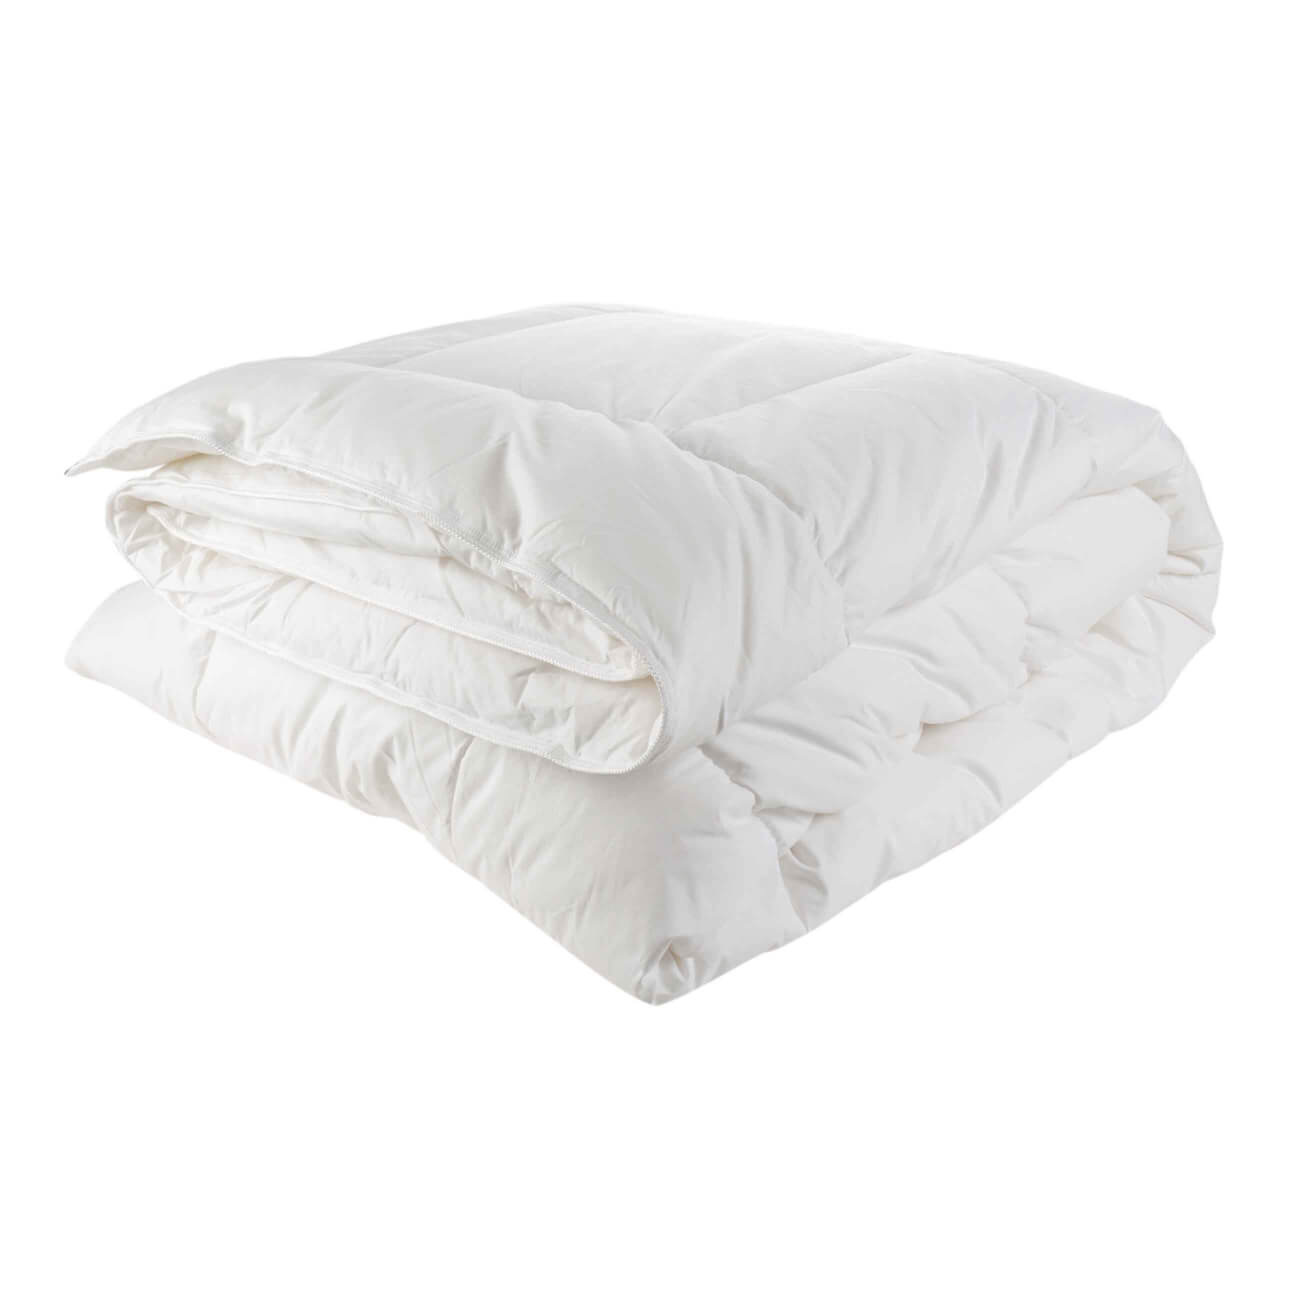 Одеяло, 140х200 см, хлопок/микрофибра, Soft cotton одеяло 140х200 см хлопок микрофибра soft cotton